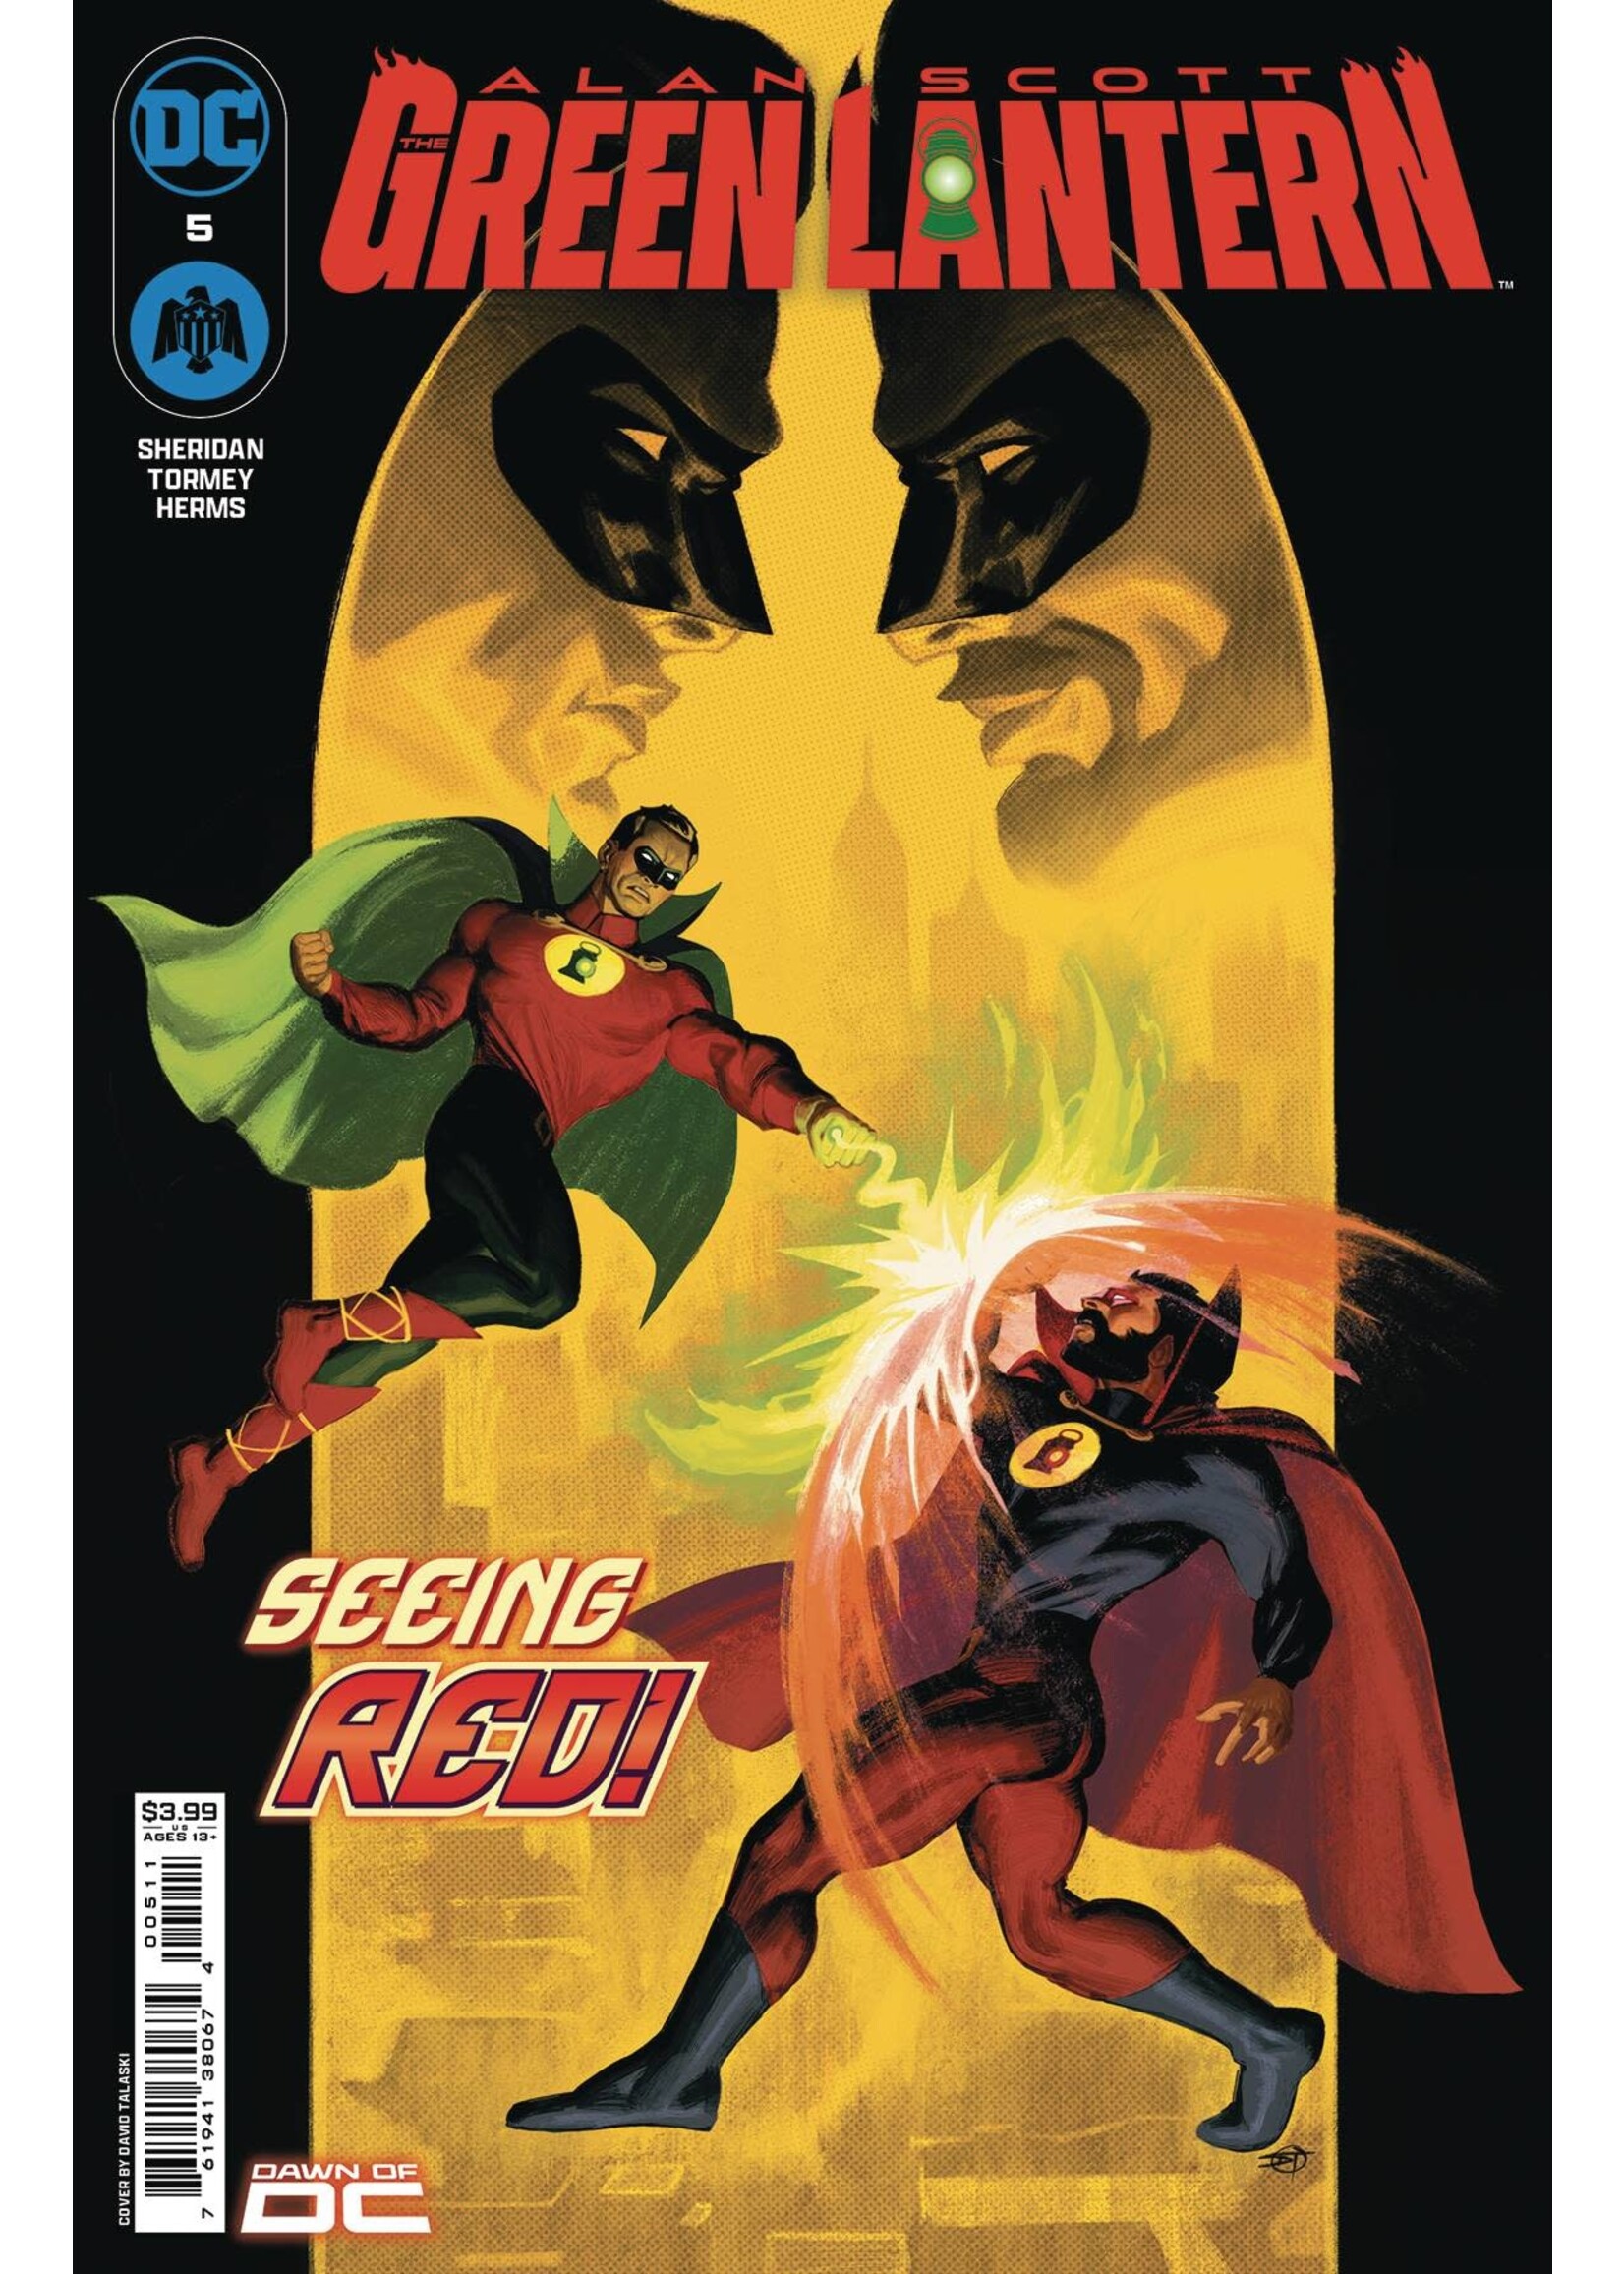 DC COMICS ALAN SCOTT THE GREEN LANTERN #5